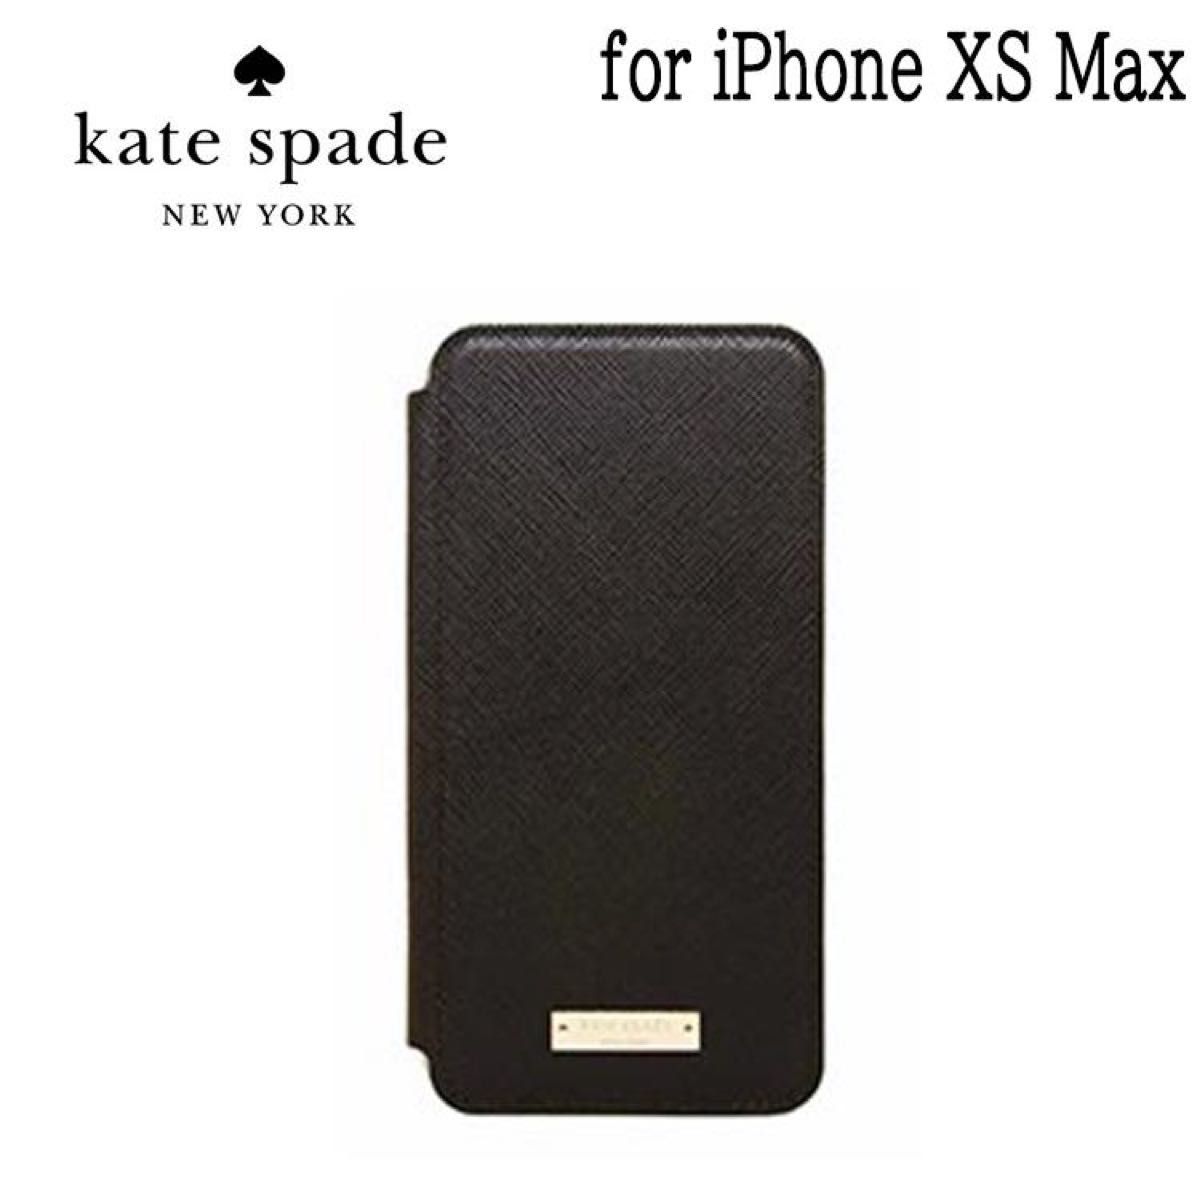 iPhoneXS MAX ケース スマホケース ケイトスペード kate spade ブックタイプケース ブラック 未開封・未使用